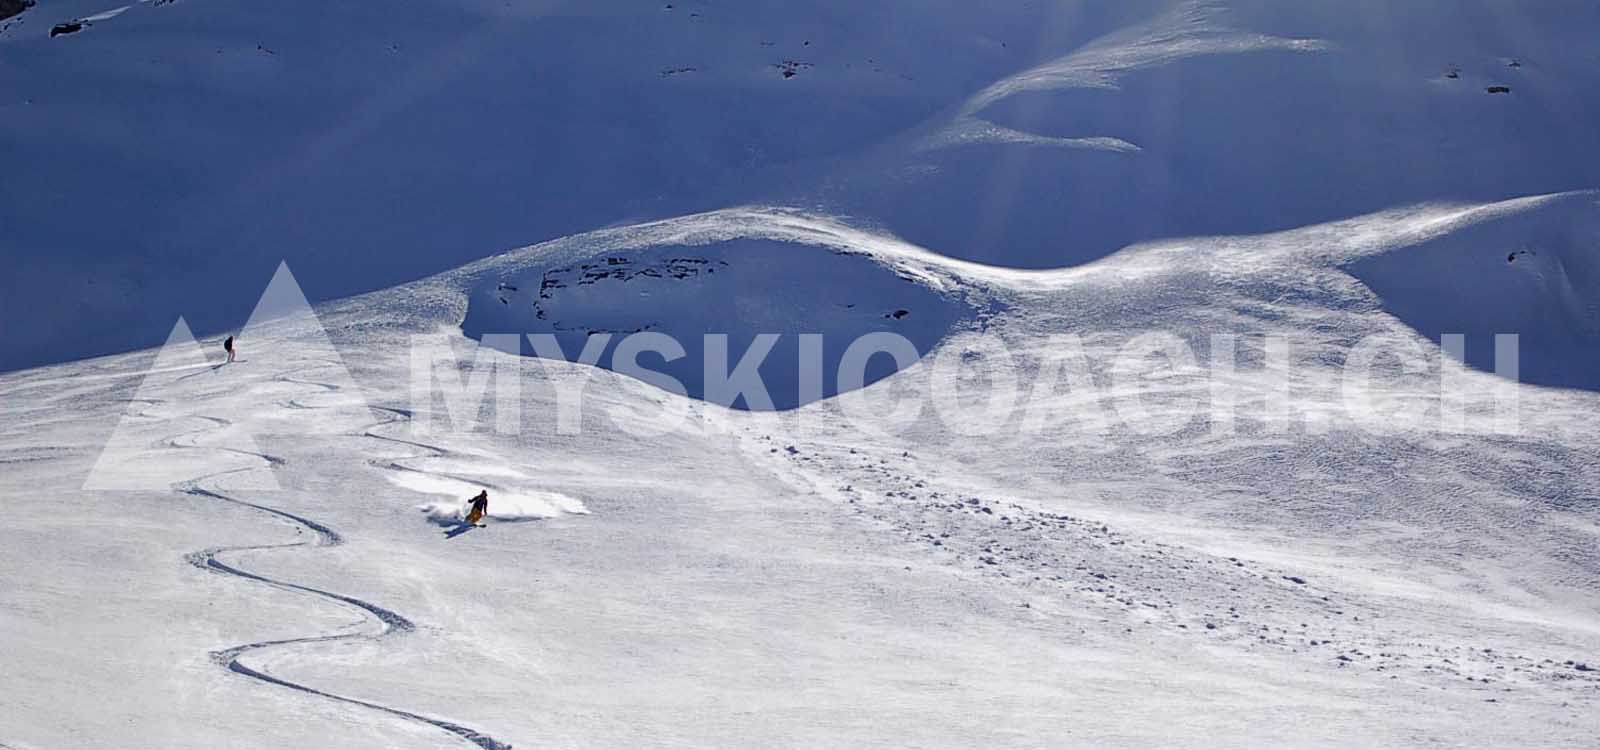 Cours avalanche Valais ¦ niveau 2 ¦ Snow Safety Myskicoach.ch